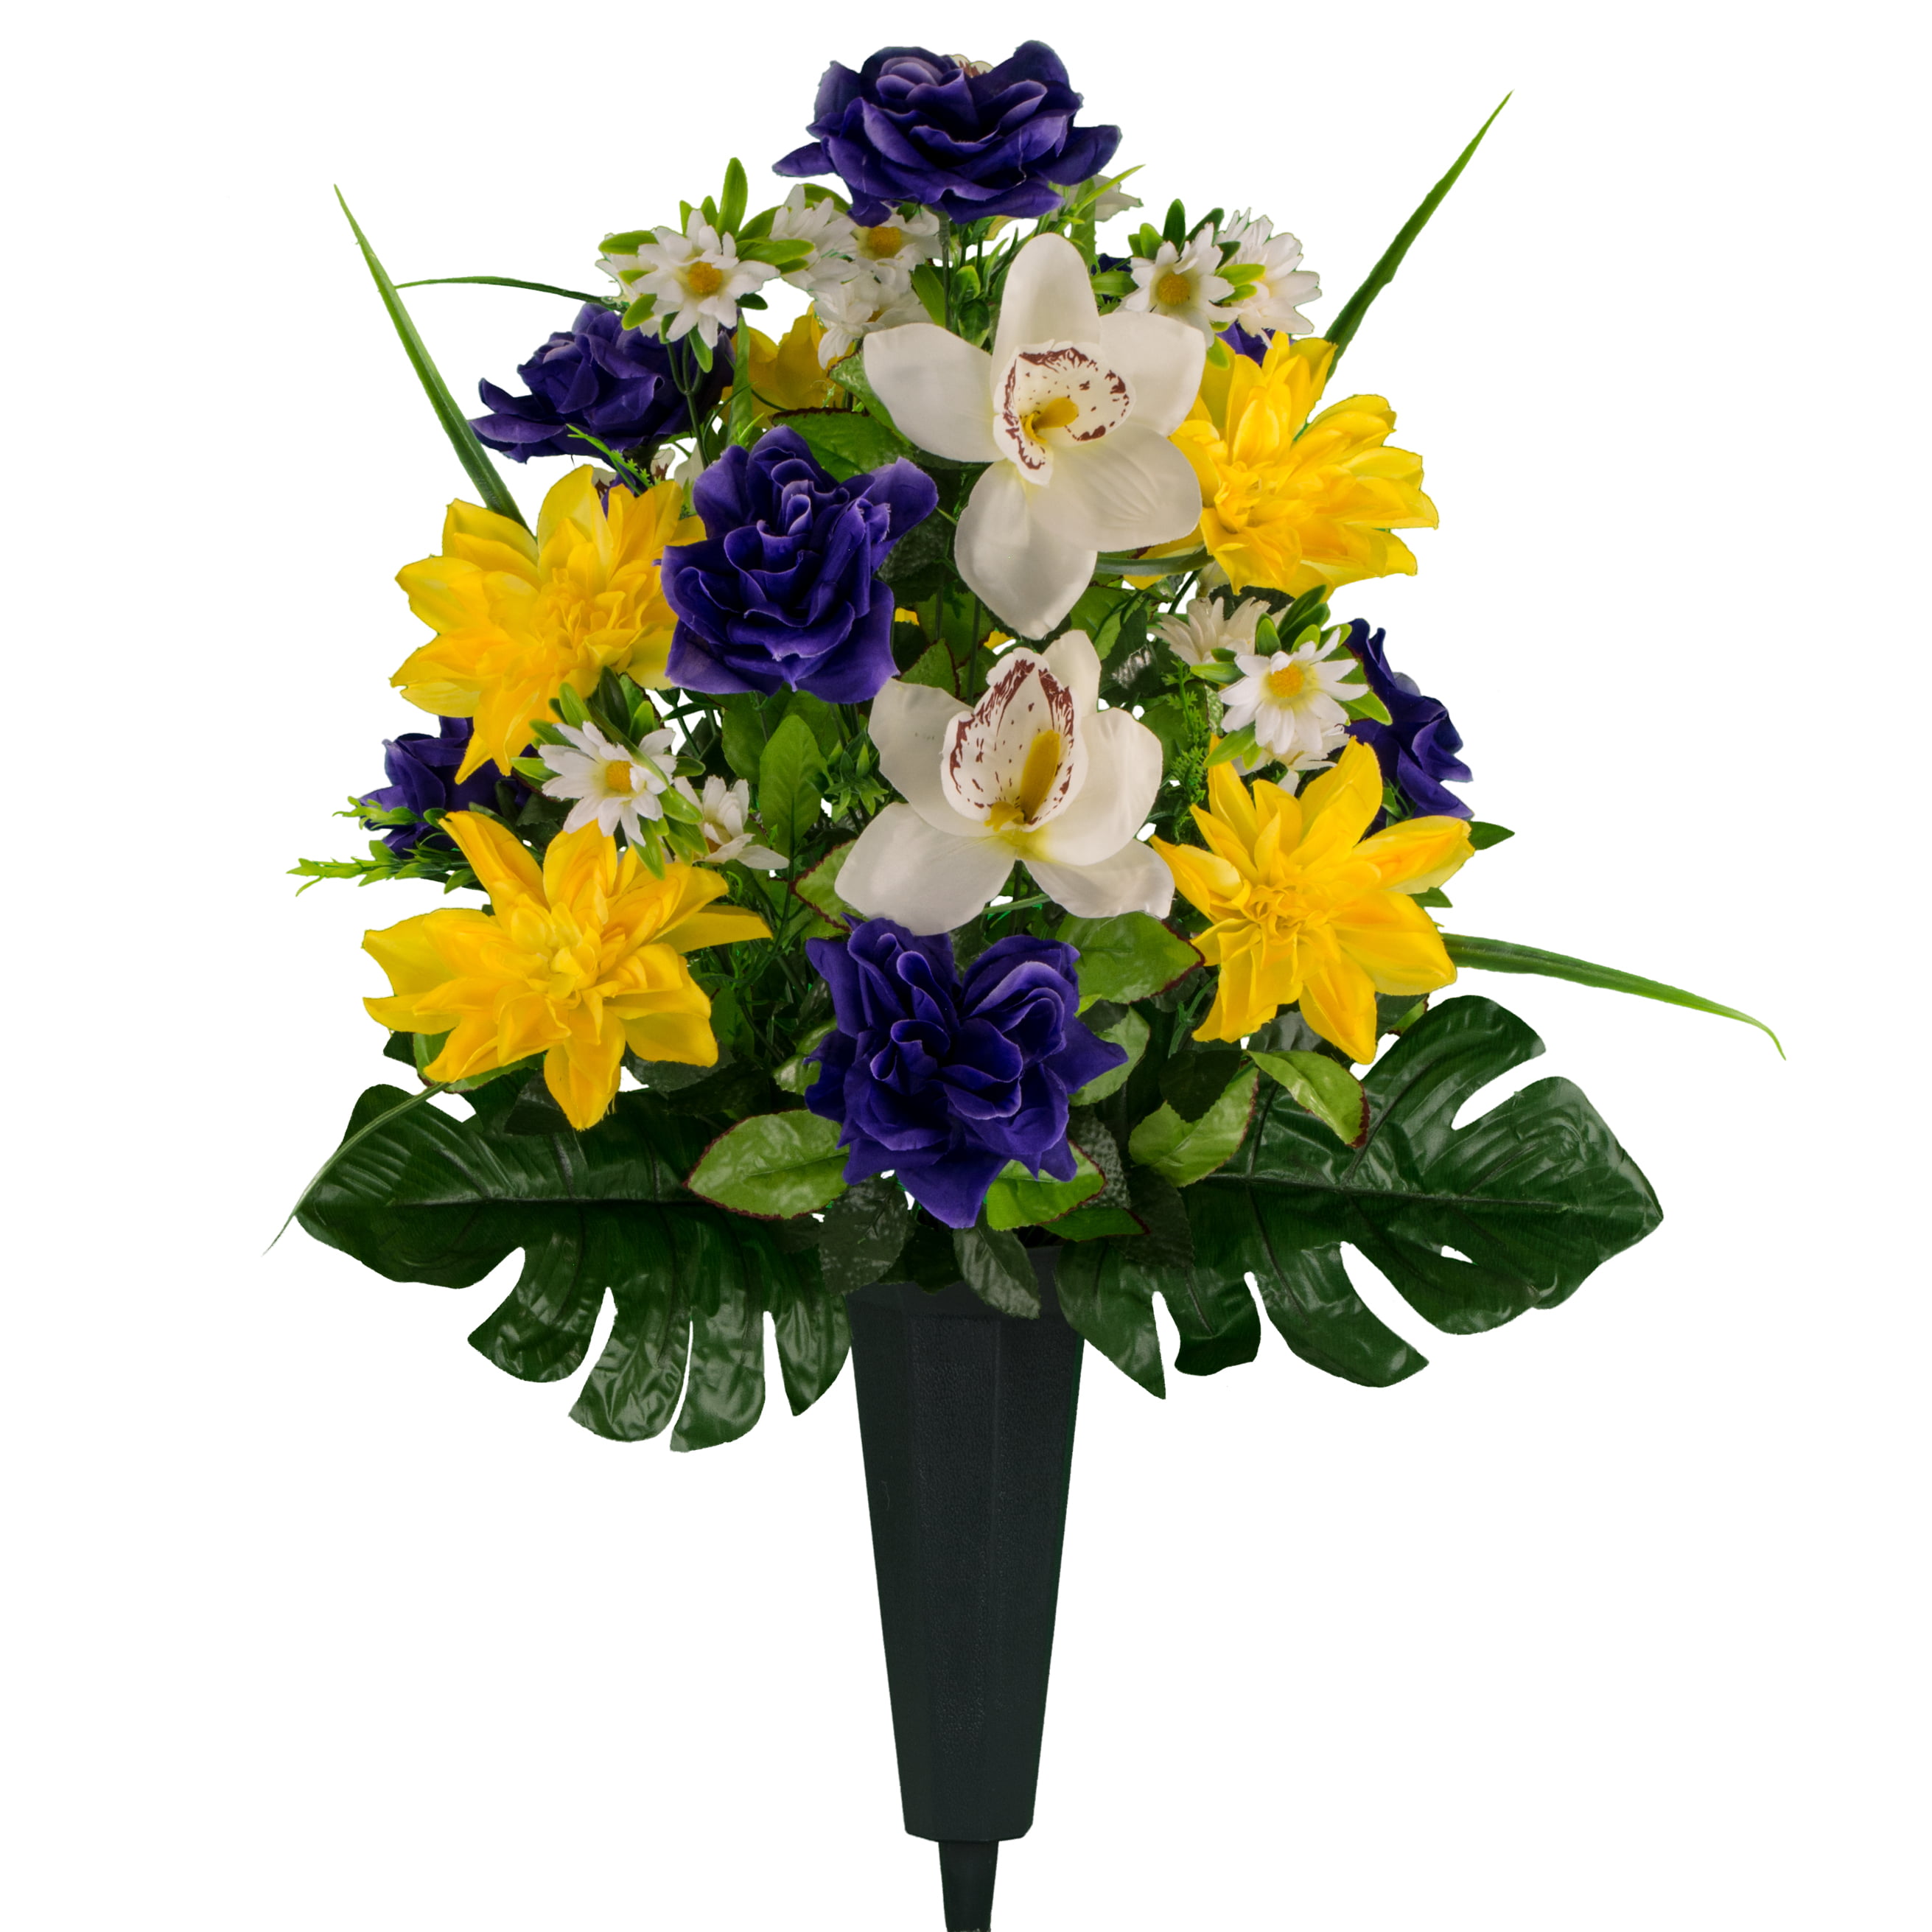 New Stunning Artificial Flower Arrangement Purple/Ivory In Black Pot For Grave 